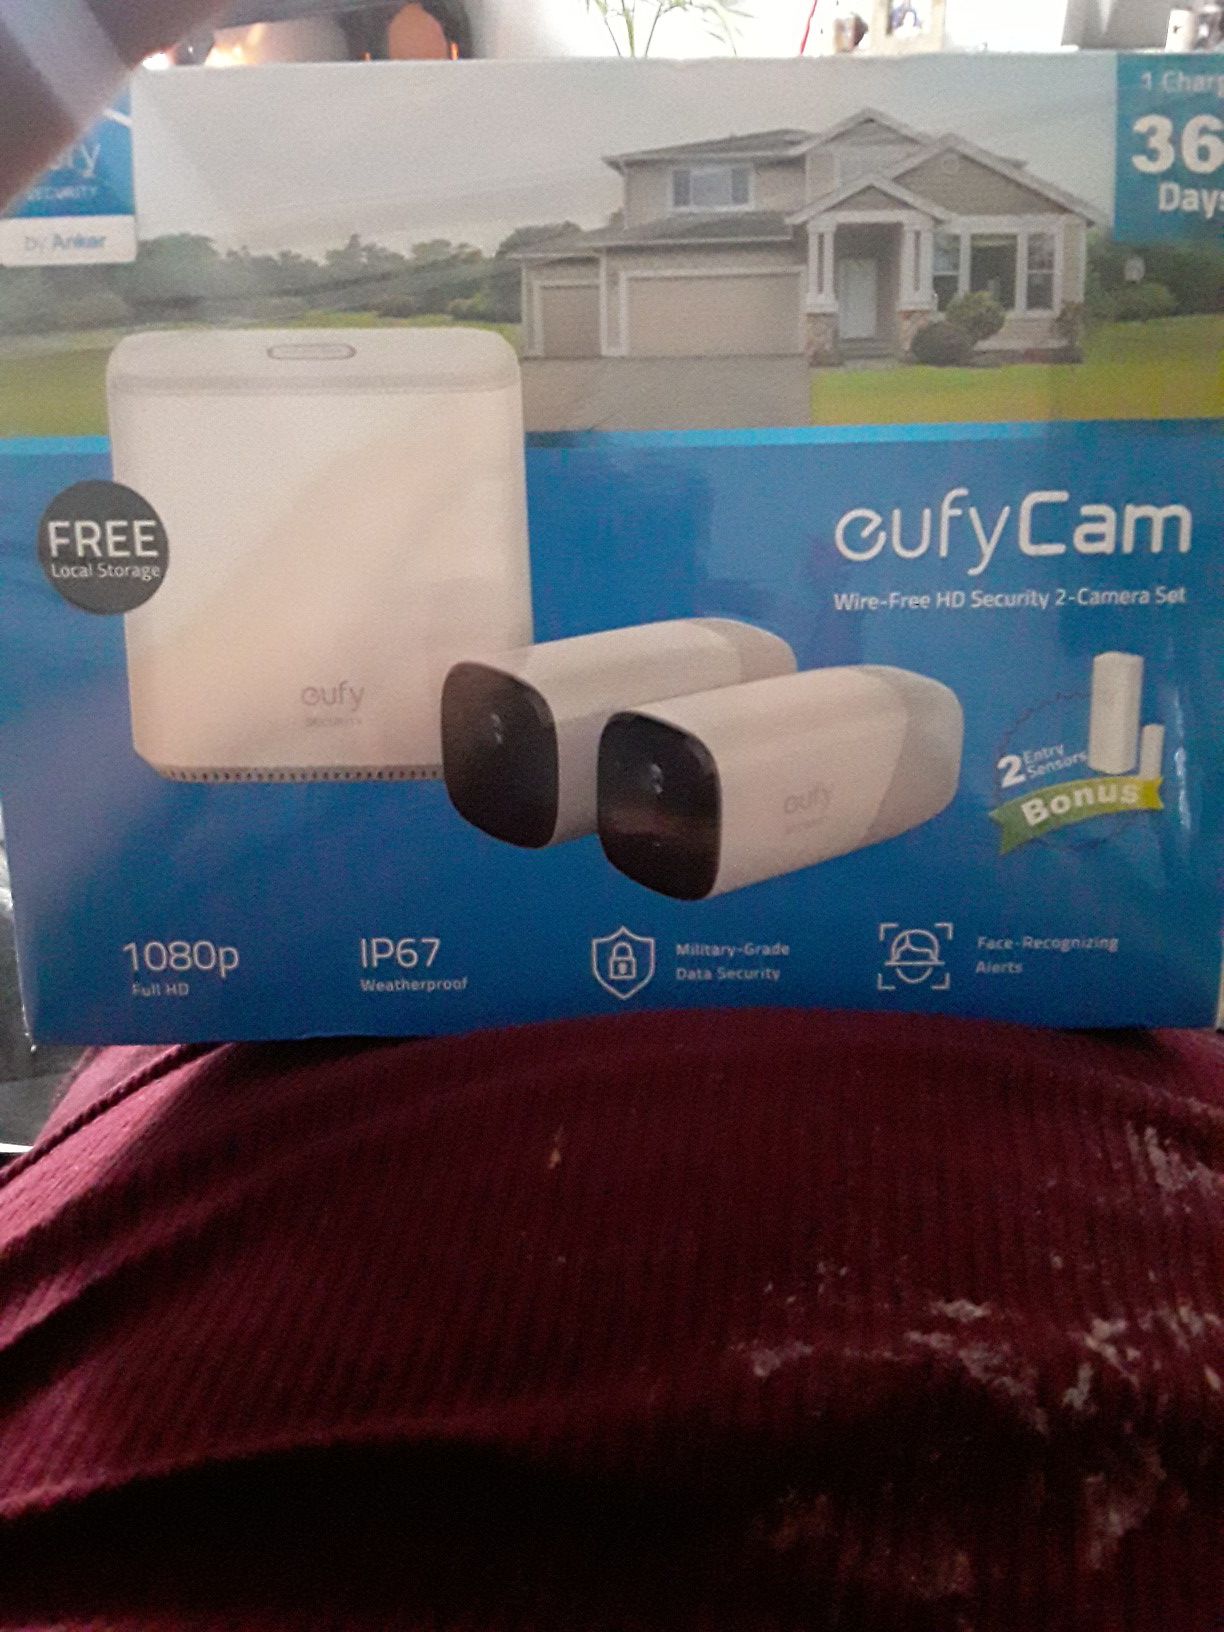 Eufy Cam Wire-Free HD Security 2 Camera Set w/ 2 bonus motion sensors